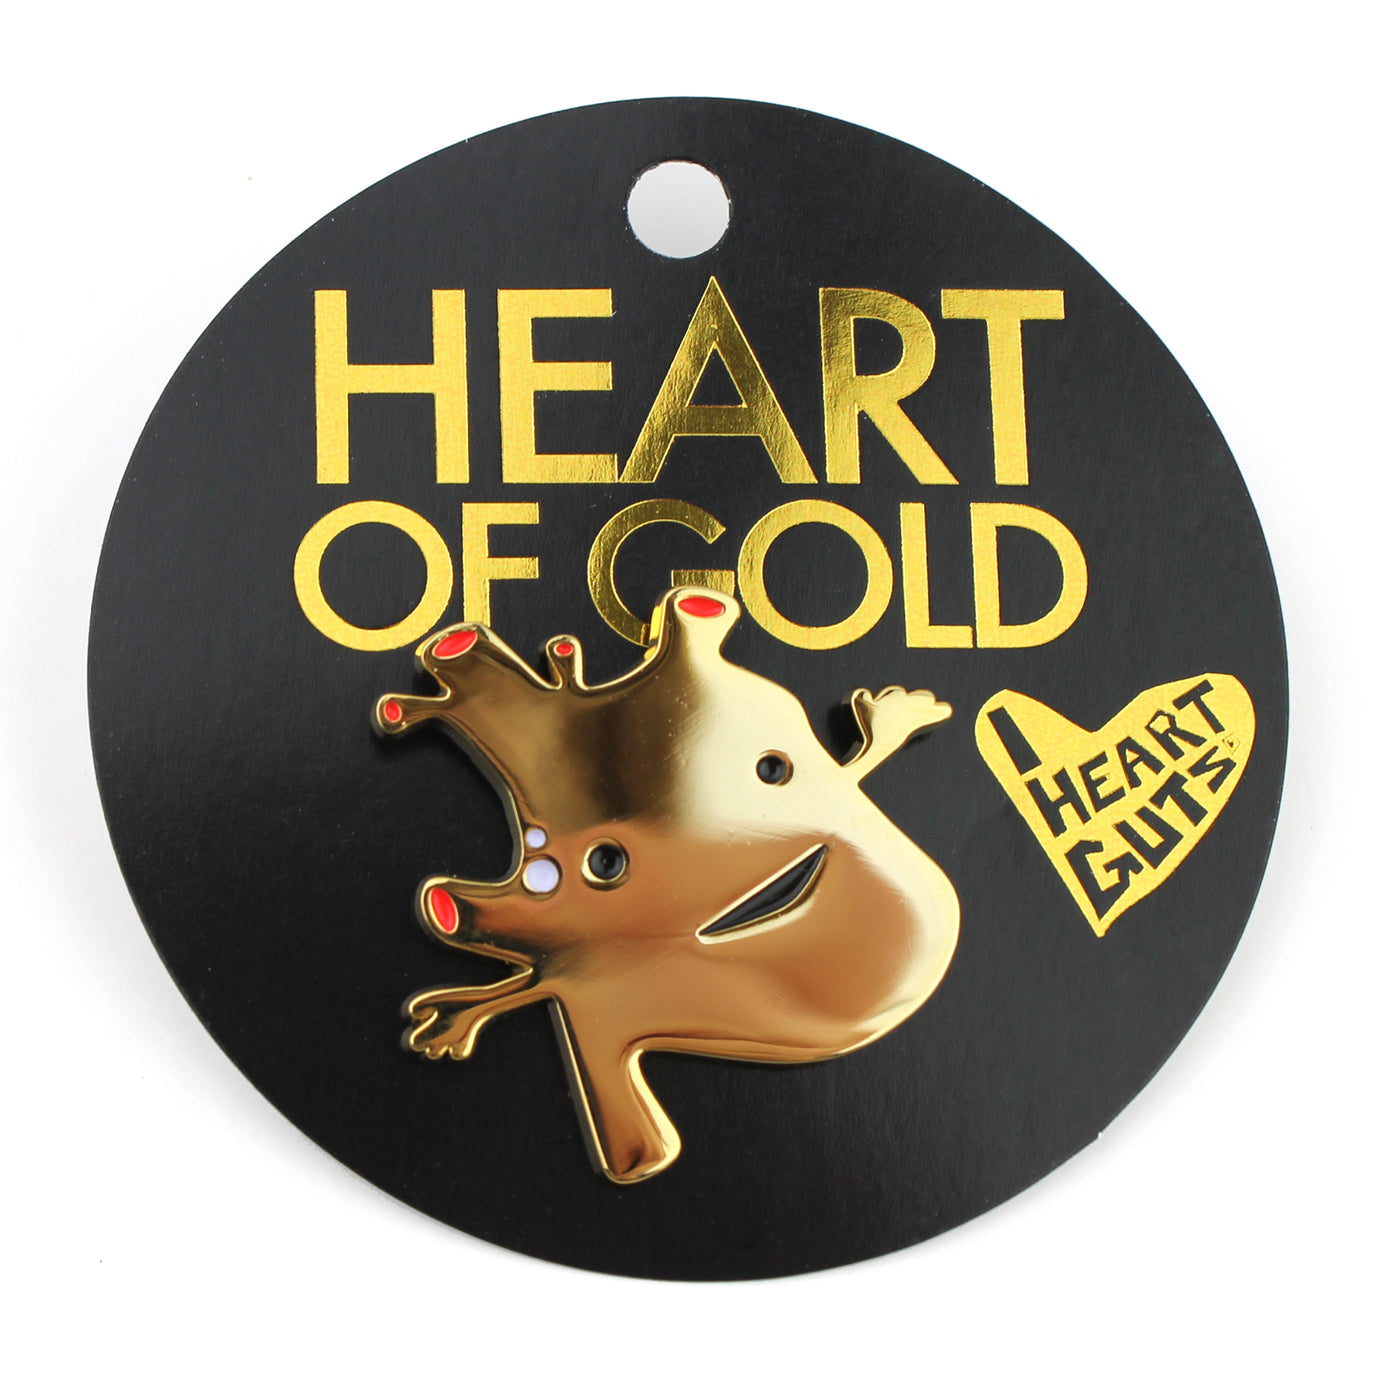 Heart of Gold Enamel Lapel Pin - I Heart Guts